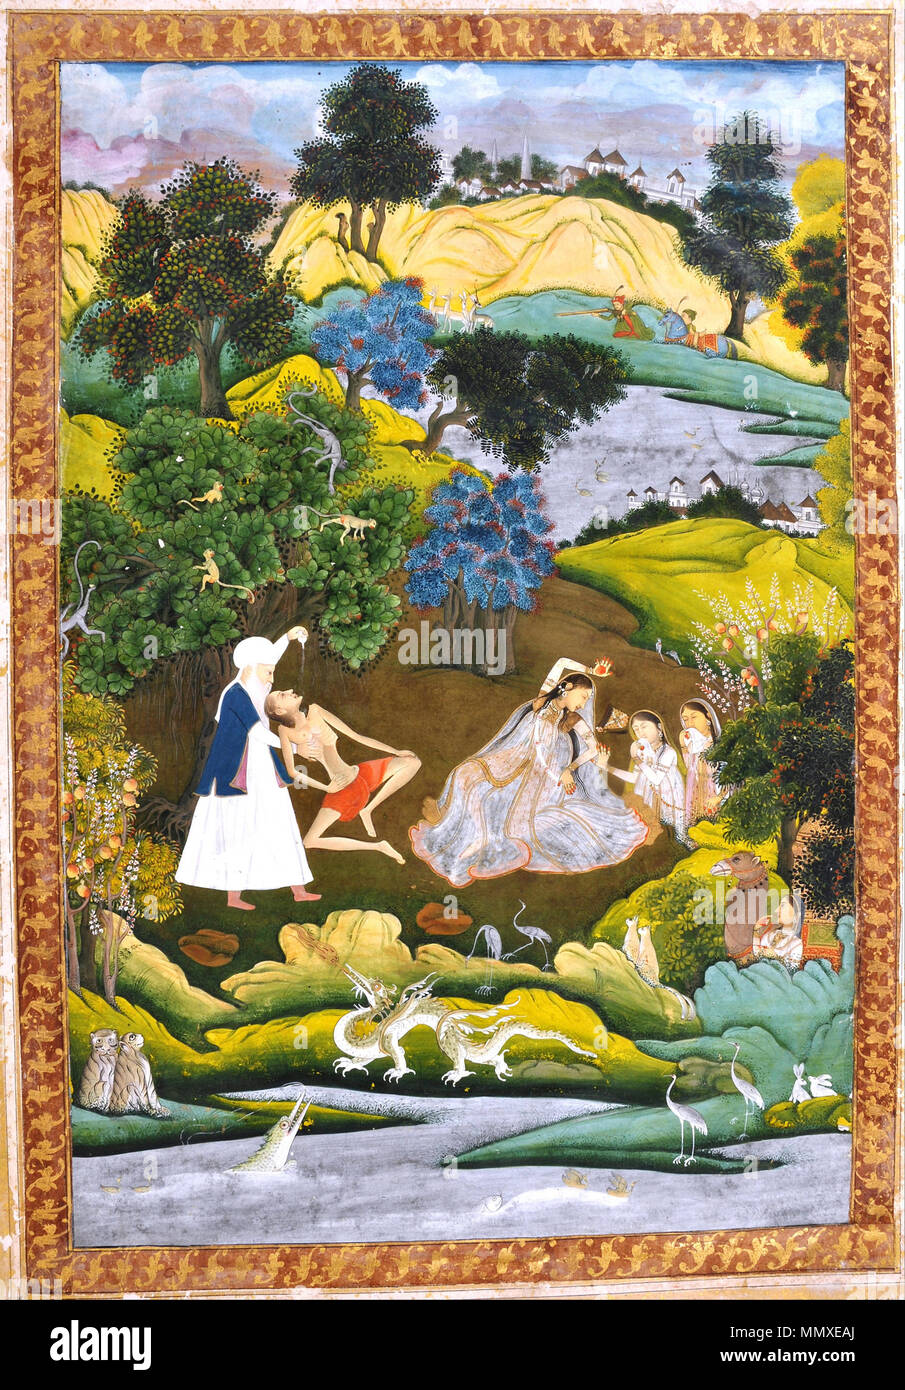 Fainted Laila and Majnun-Based on the Khamsa of Persian poet Nizami. (1740 AD - 1750 AD). Fainted Laila and Majnun-Based on the Khamsa of Persian poet Nizami - Google Art Project Stock Photo